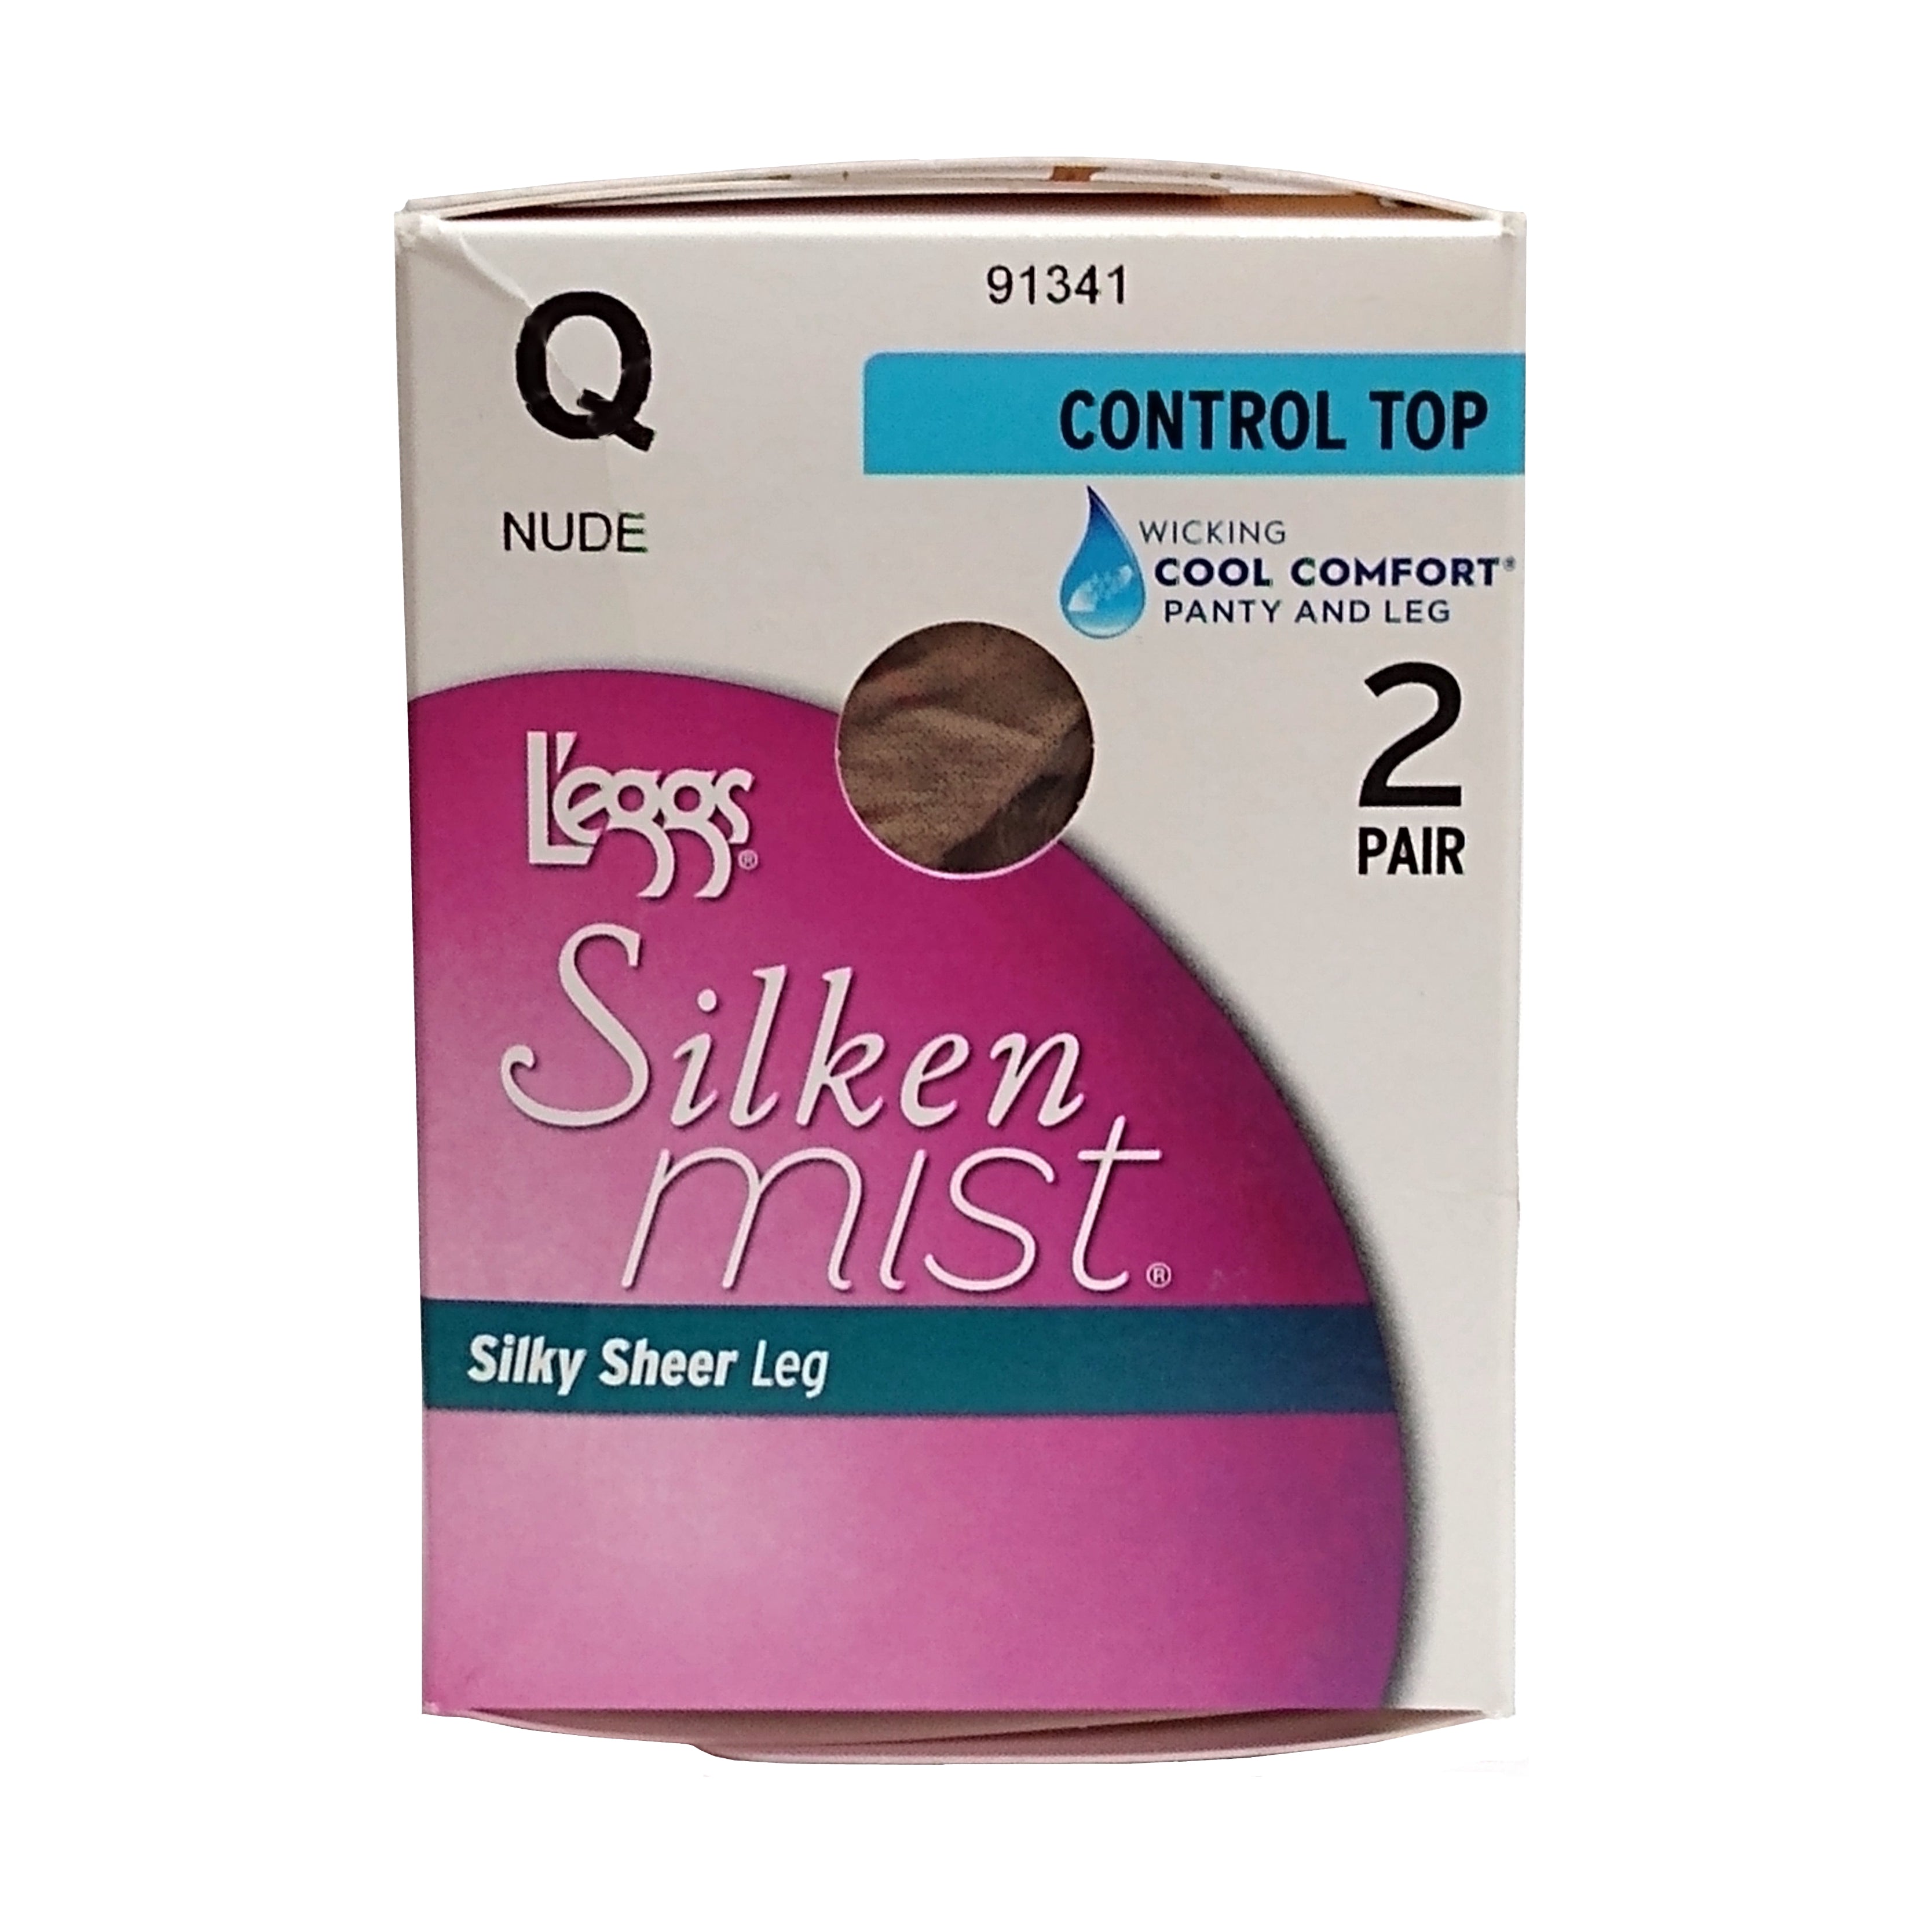 L'eggs Silken Mist Control Top Pantyhose 2 Pair, Nude, Size Q, 1 Pack –  CommonFinds